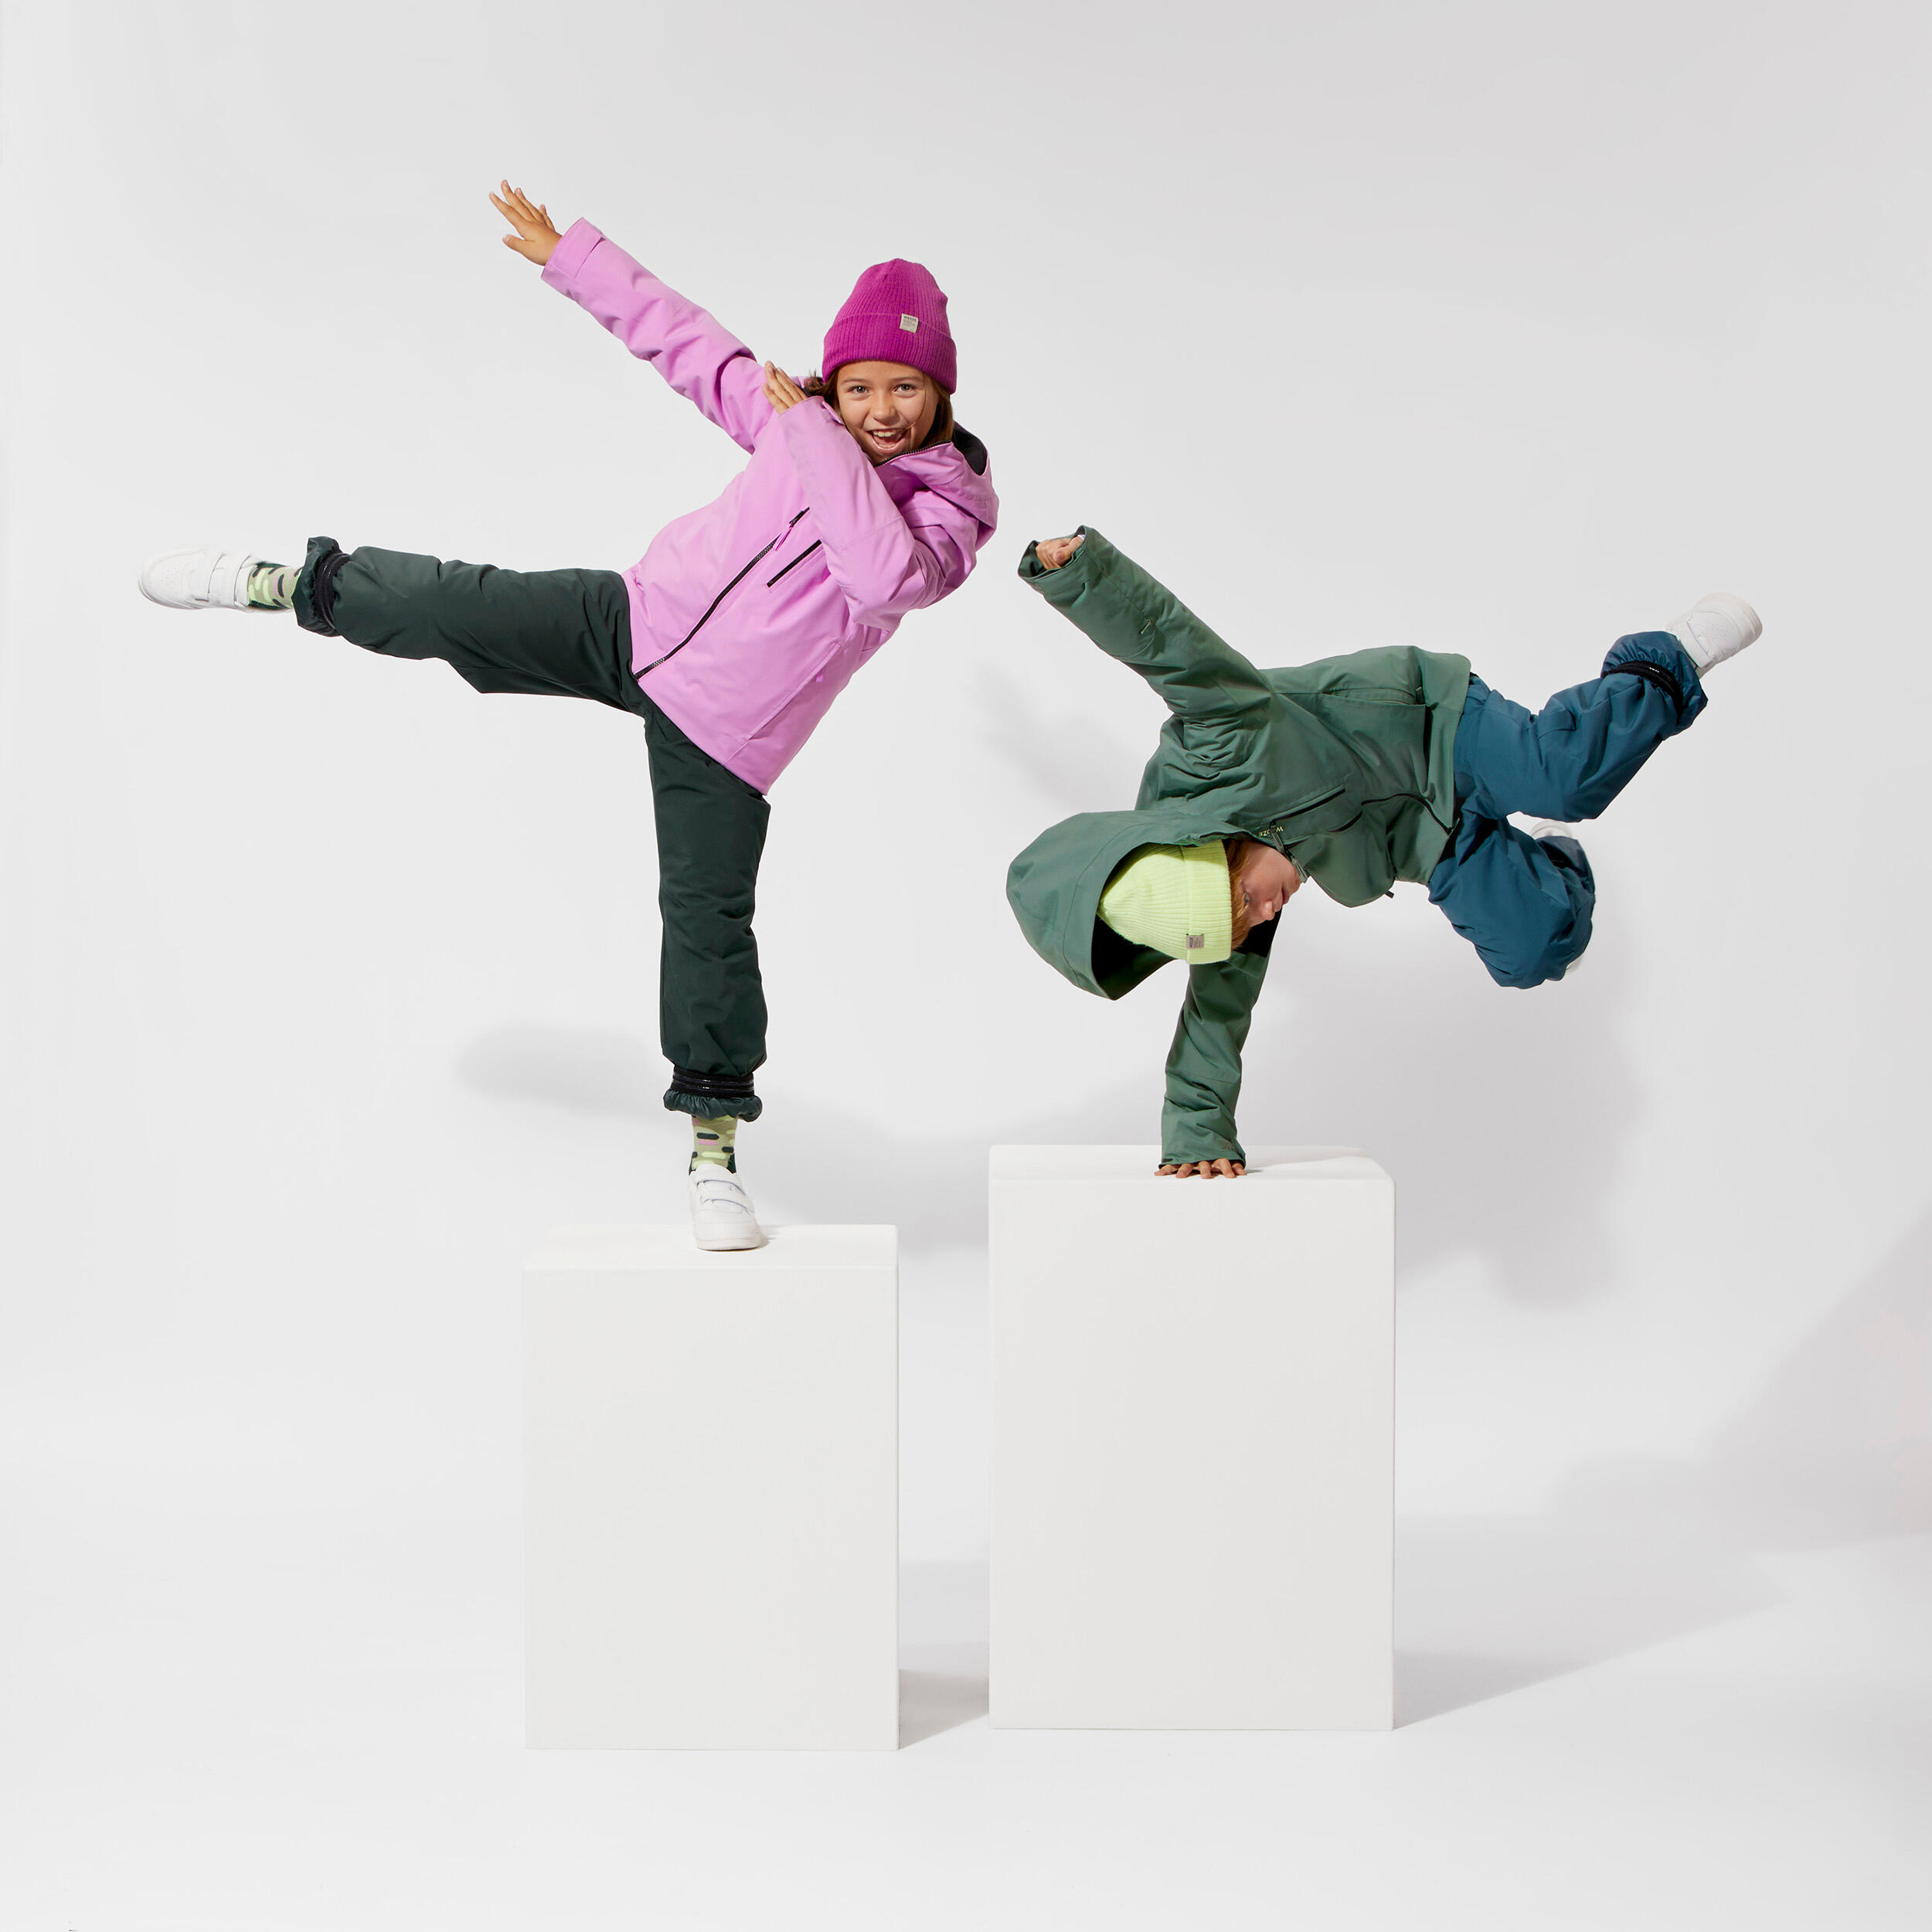 Kids’ Warm and Waterproof Ski Jacket 550 - Pink 16/20